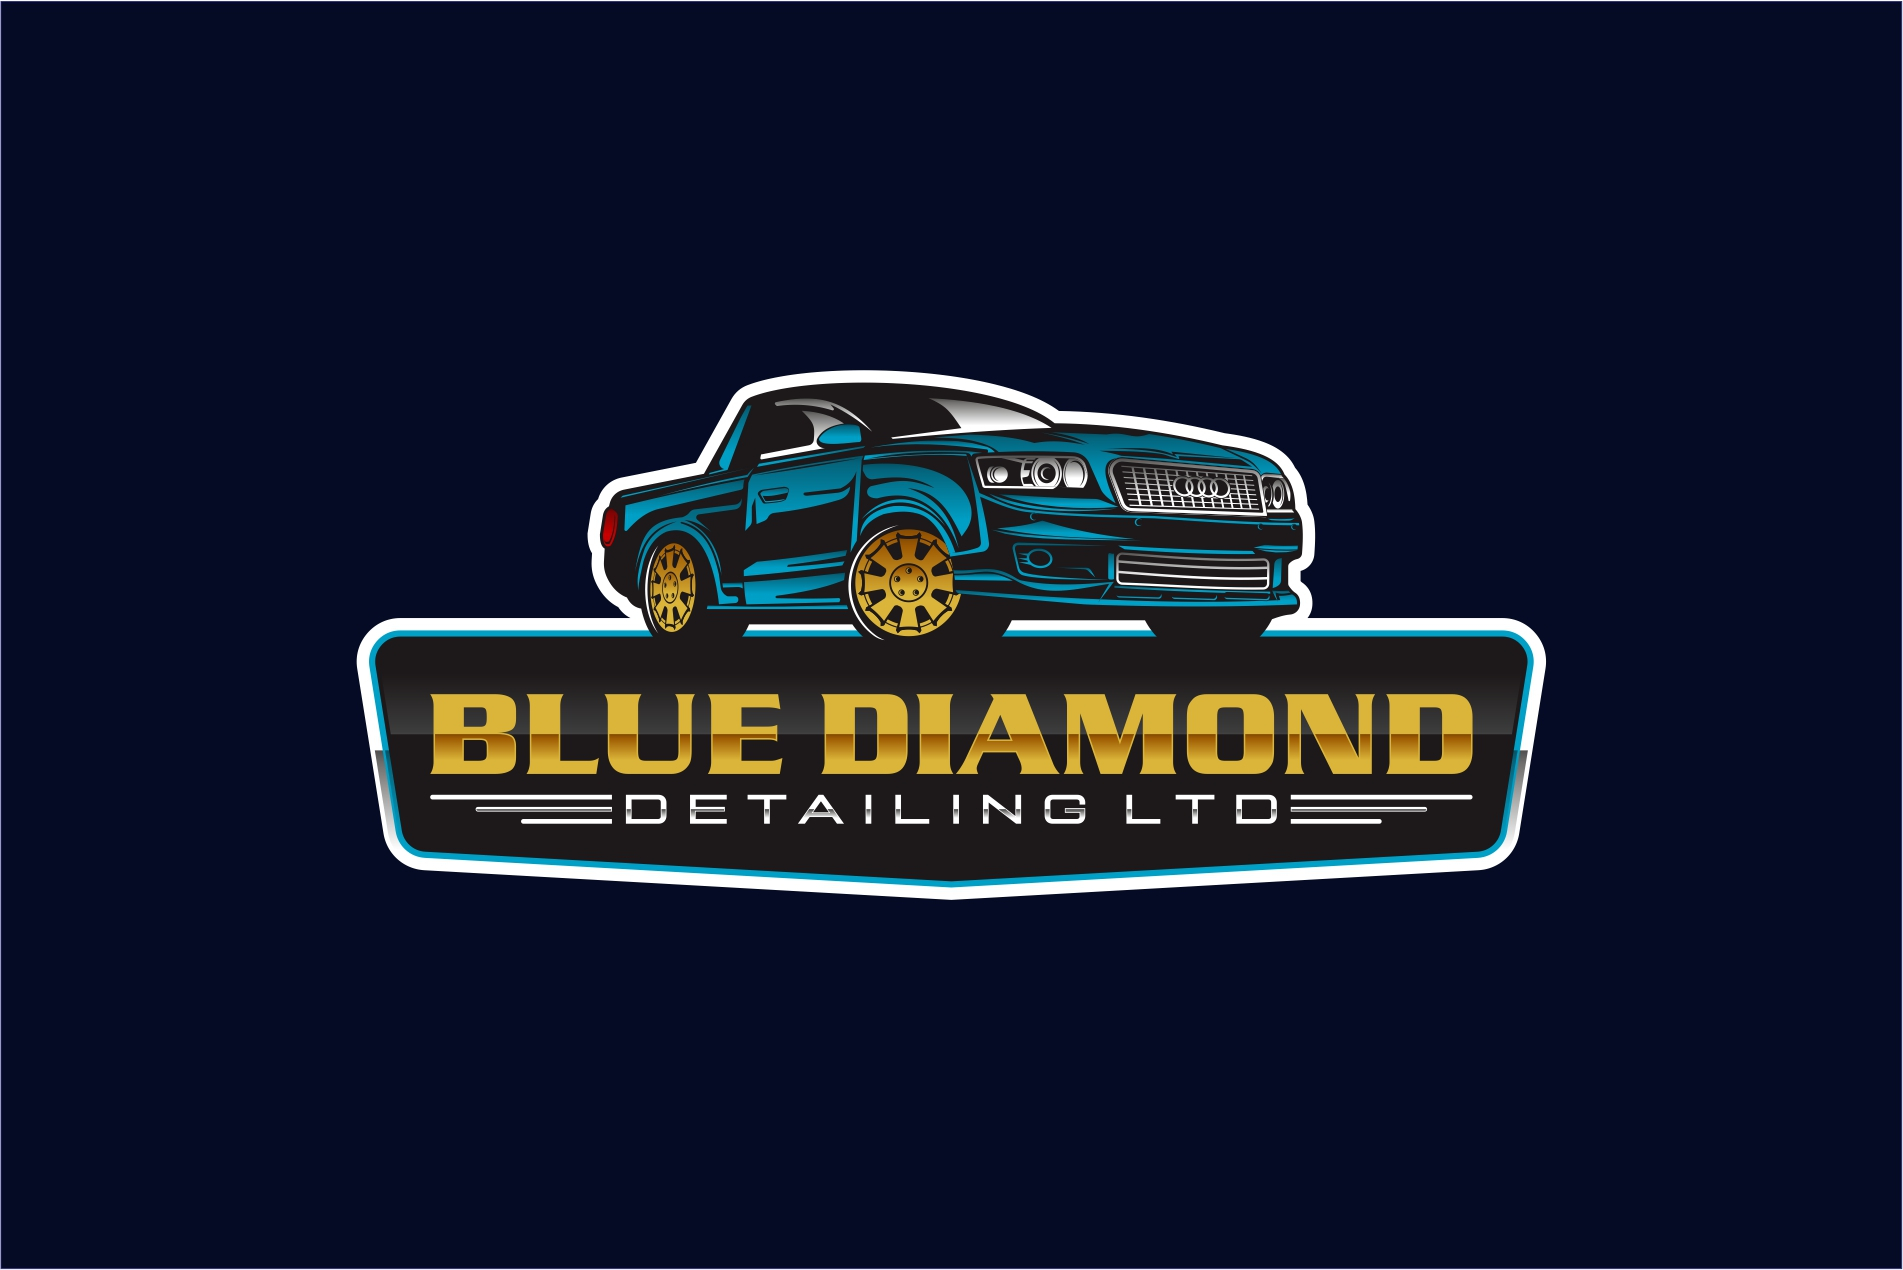 Blue Diamond Detailing LTD